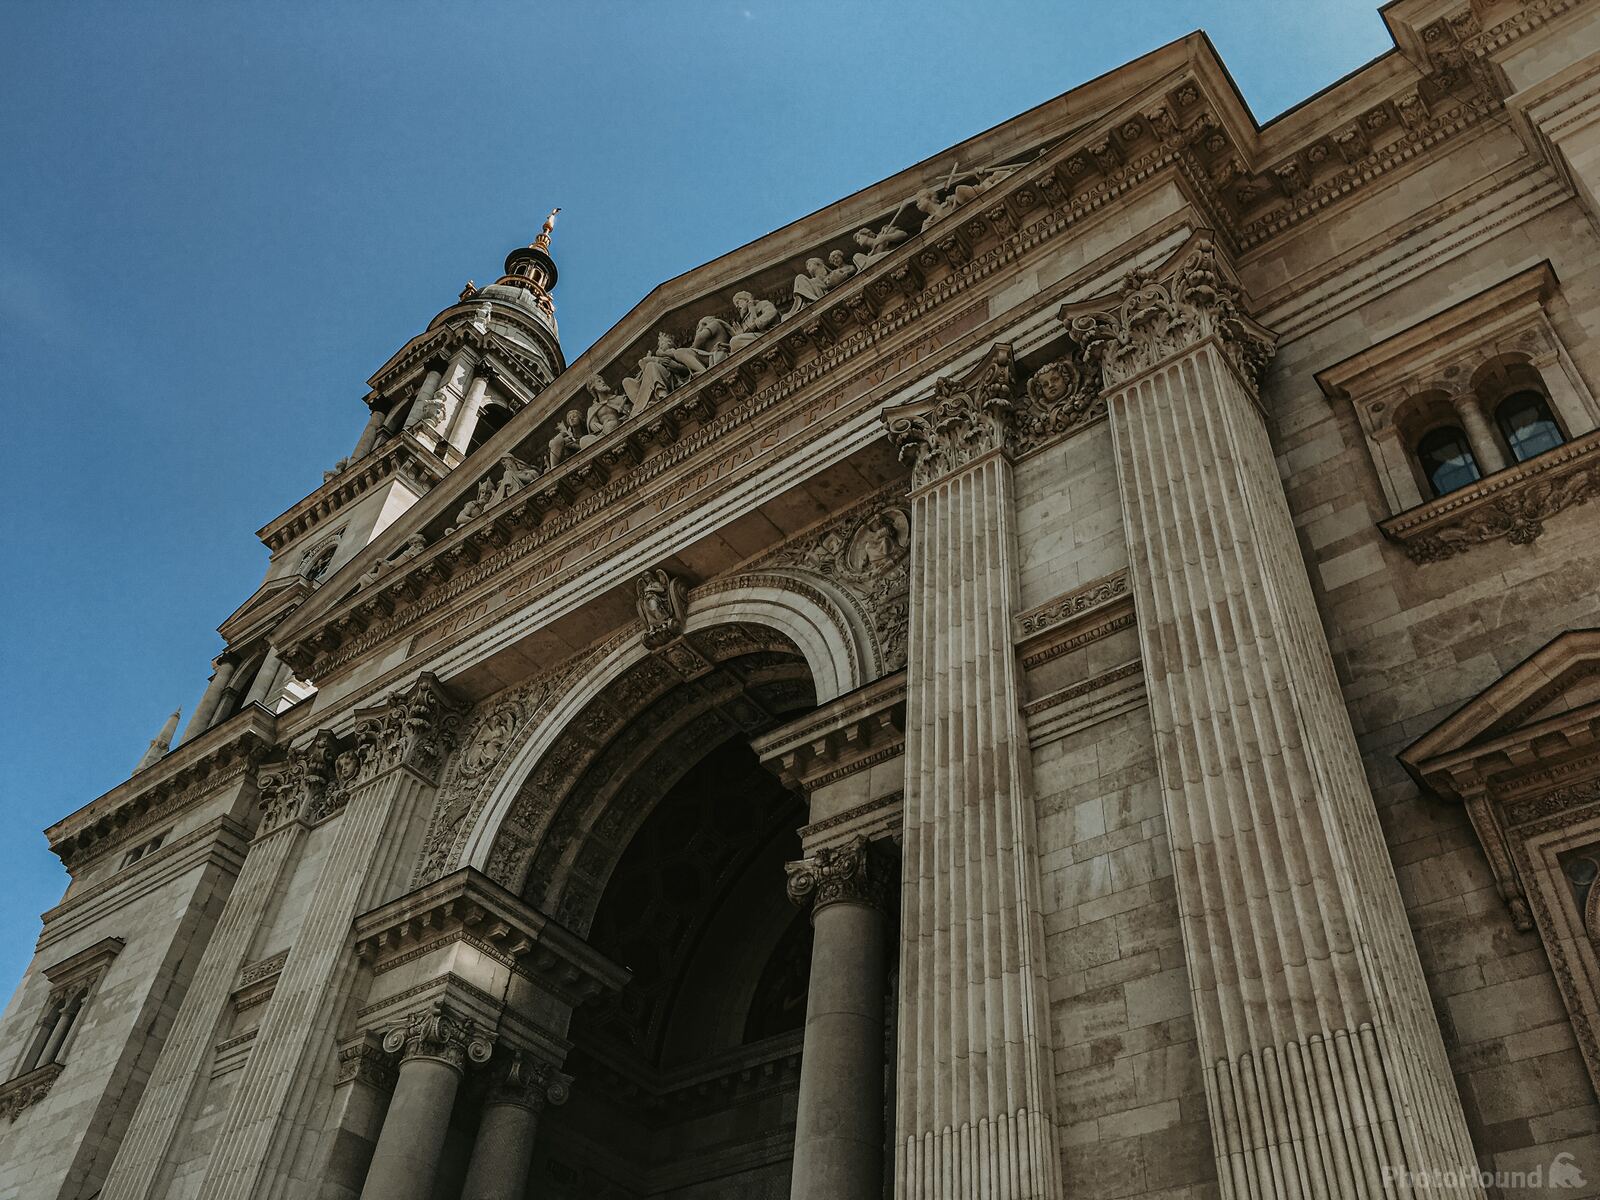 Image of St. Stephen\'s Basilica - exterior by Team PhotoHound